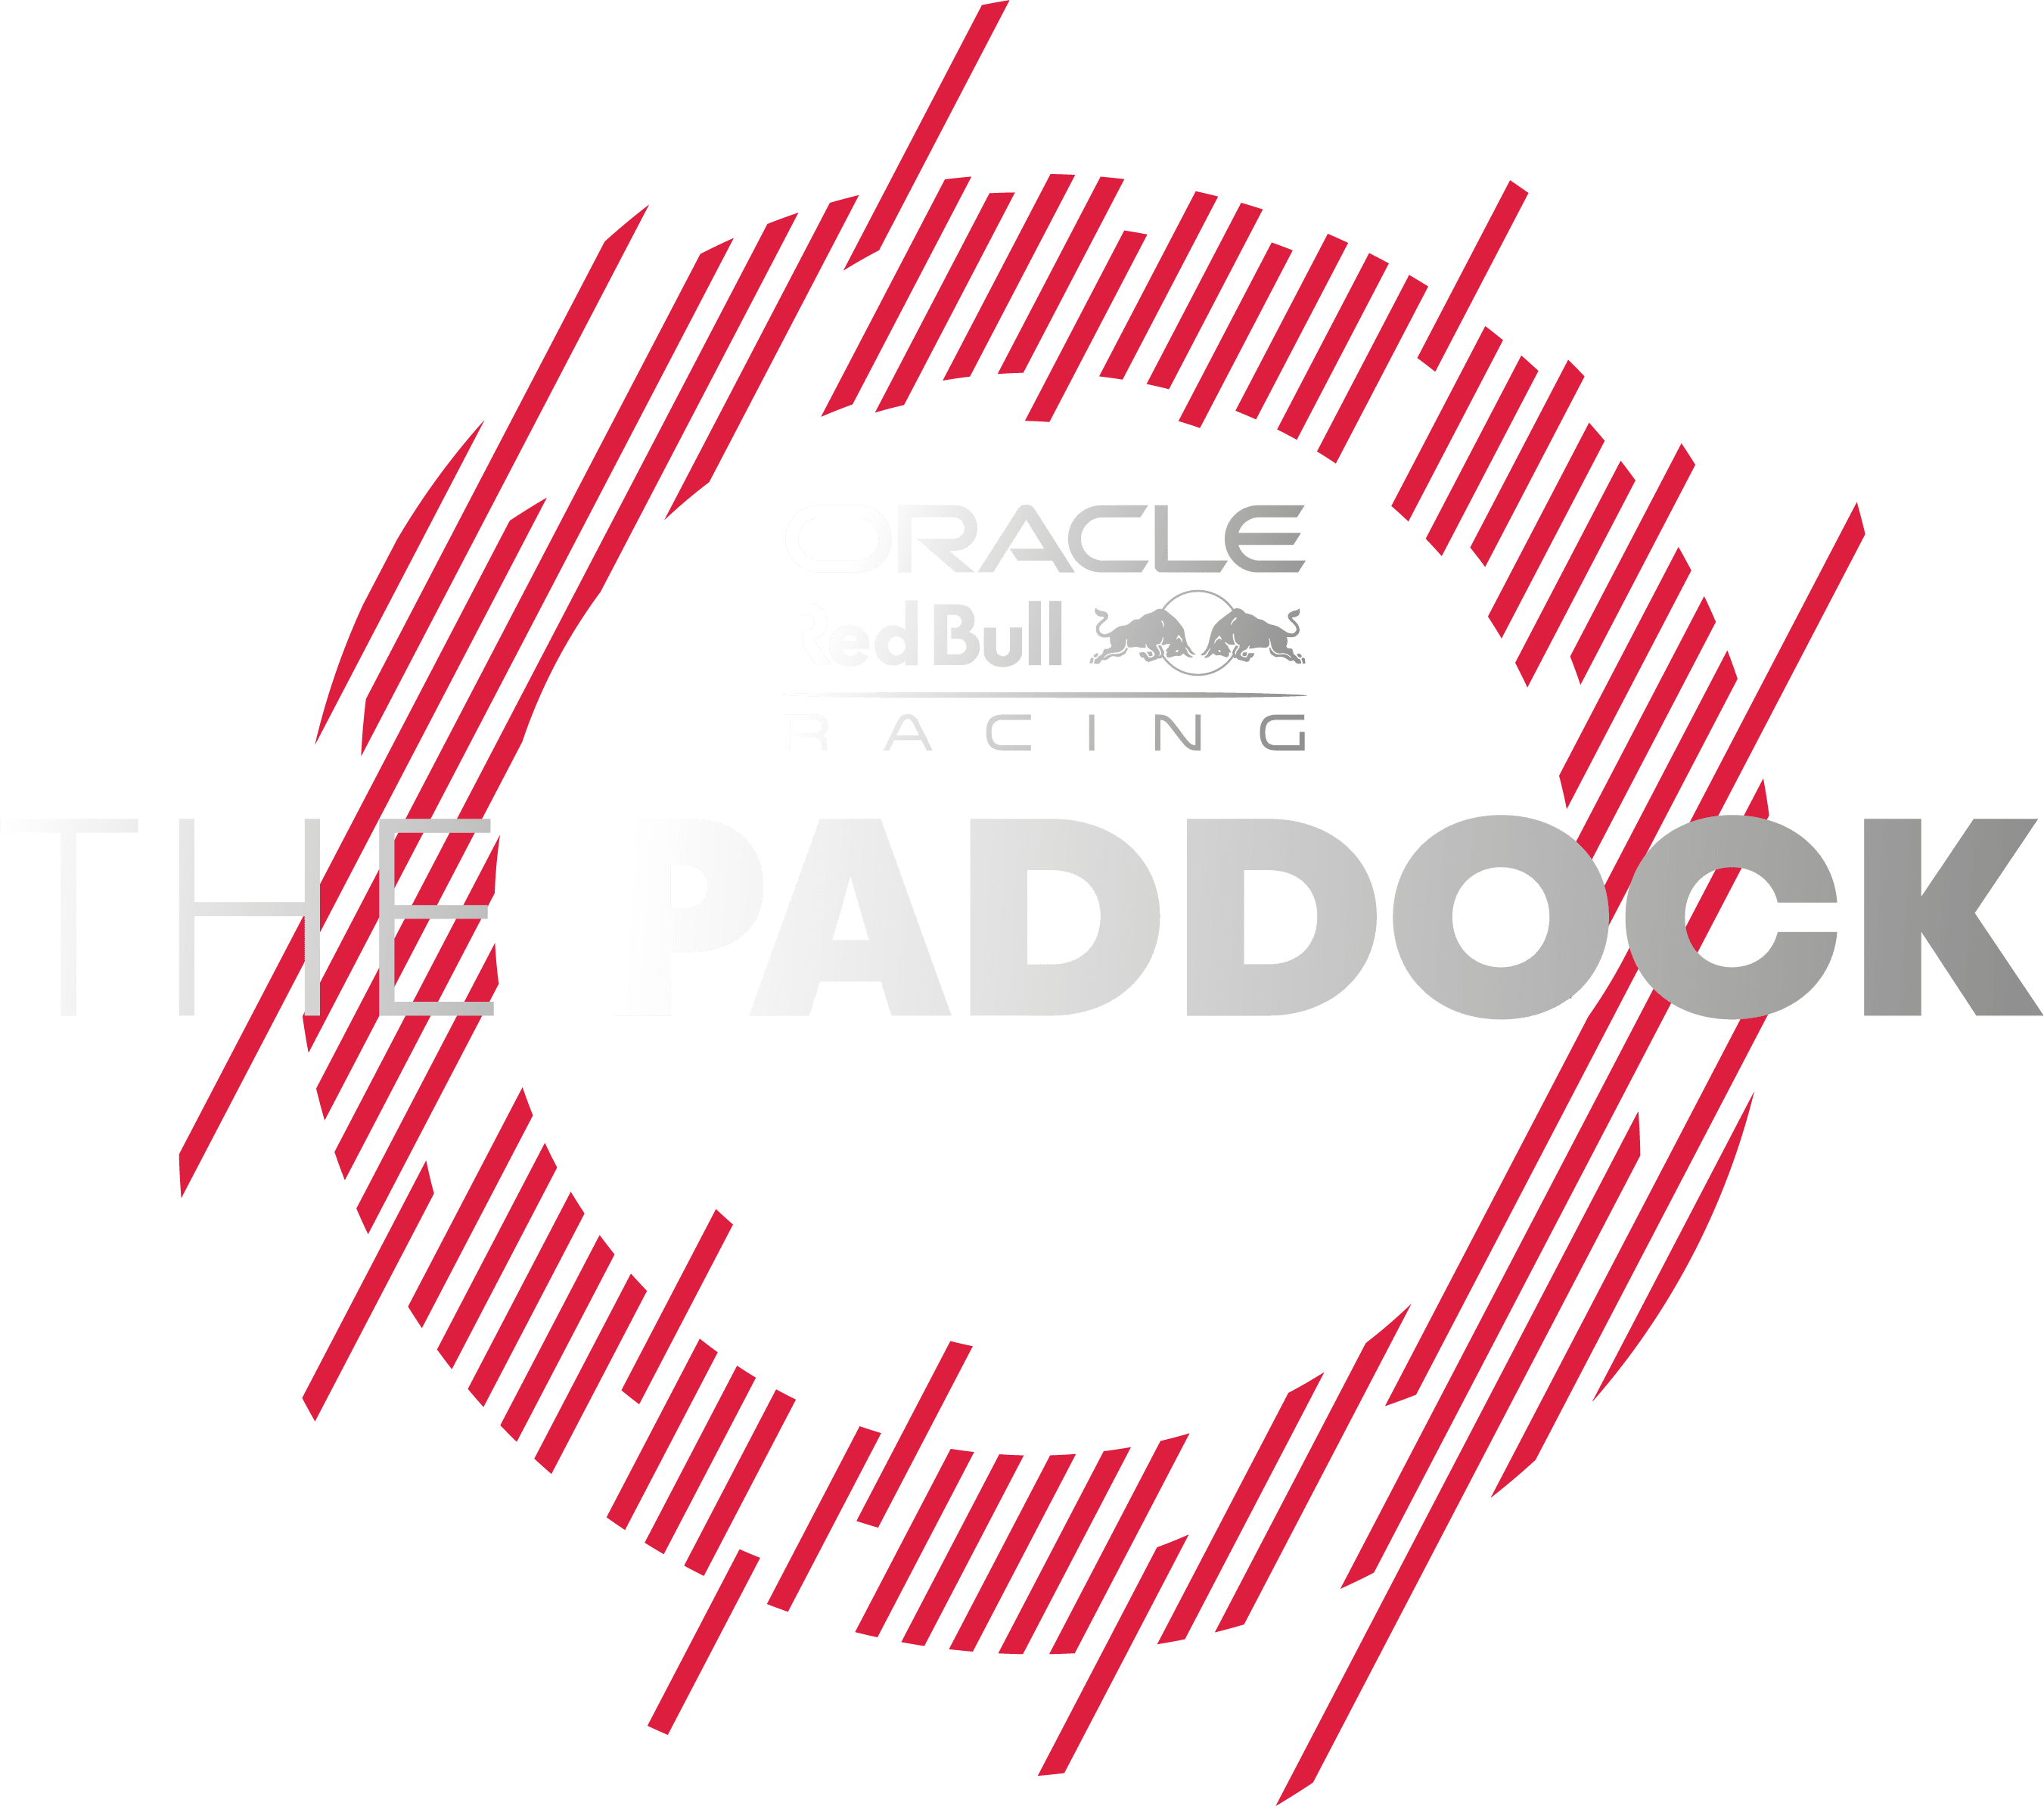 The paddock